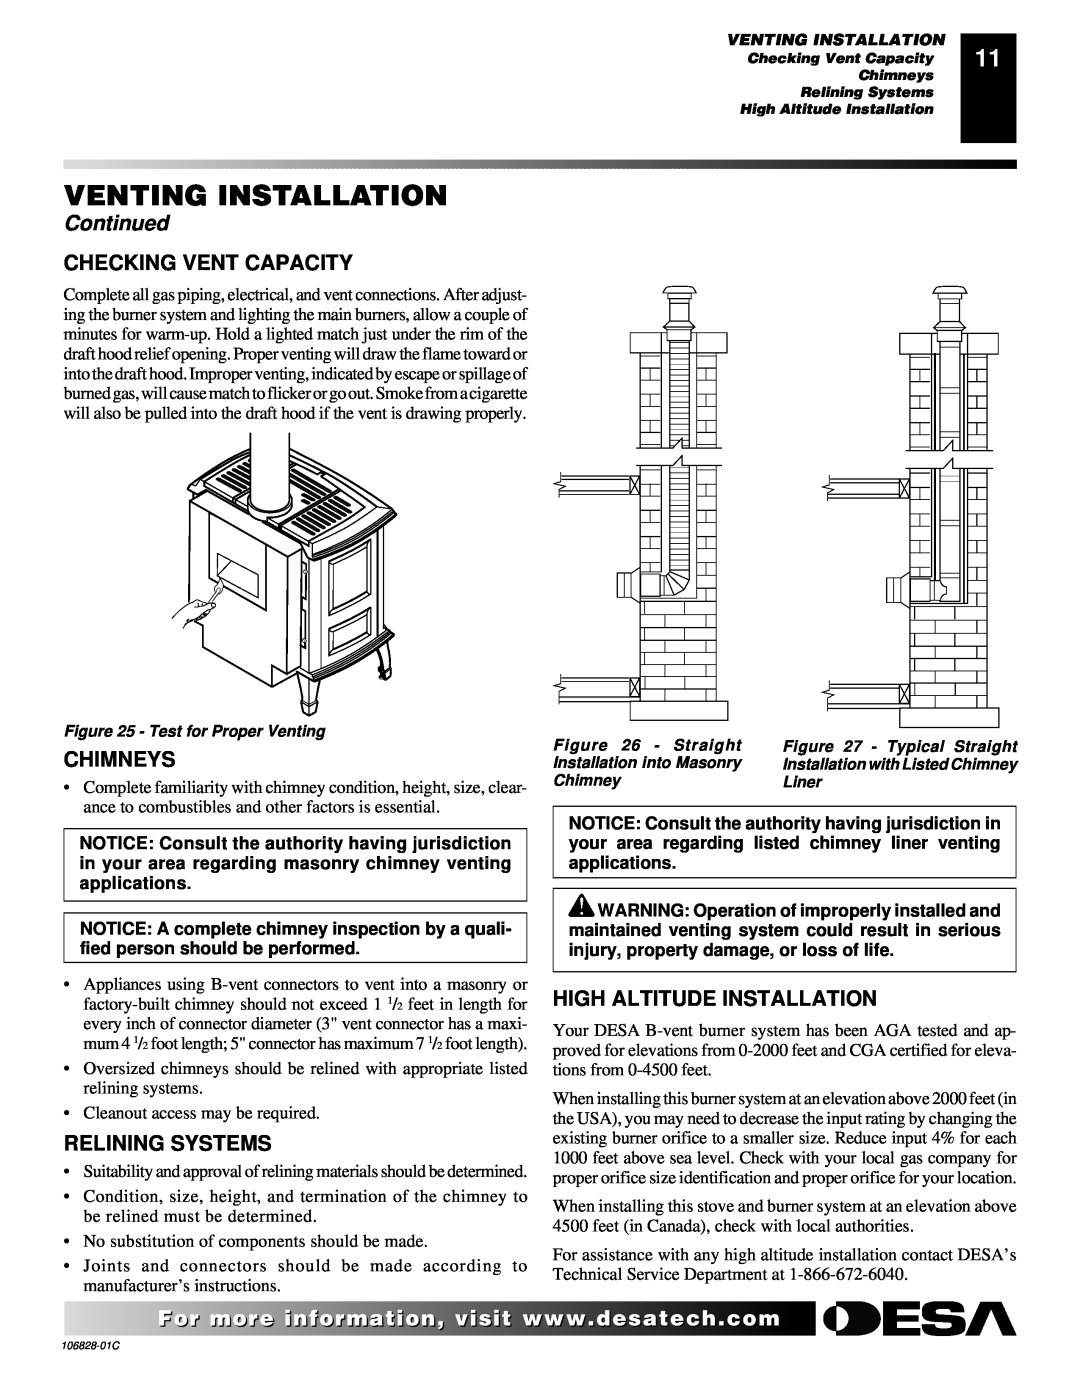 Desa SBVBP(C) Checking Vent Capacity, Chimneys, Relining Systems, High Altitude Installation, Venting Installation 